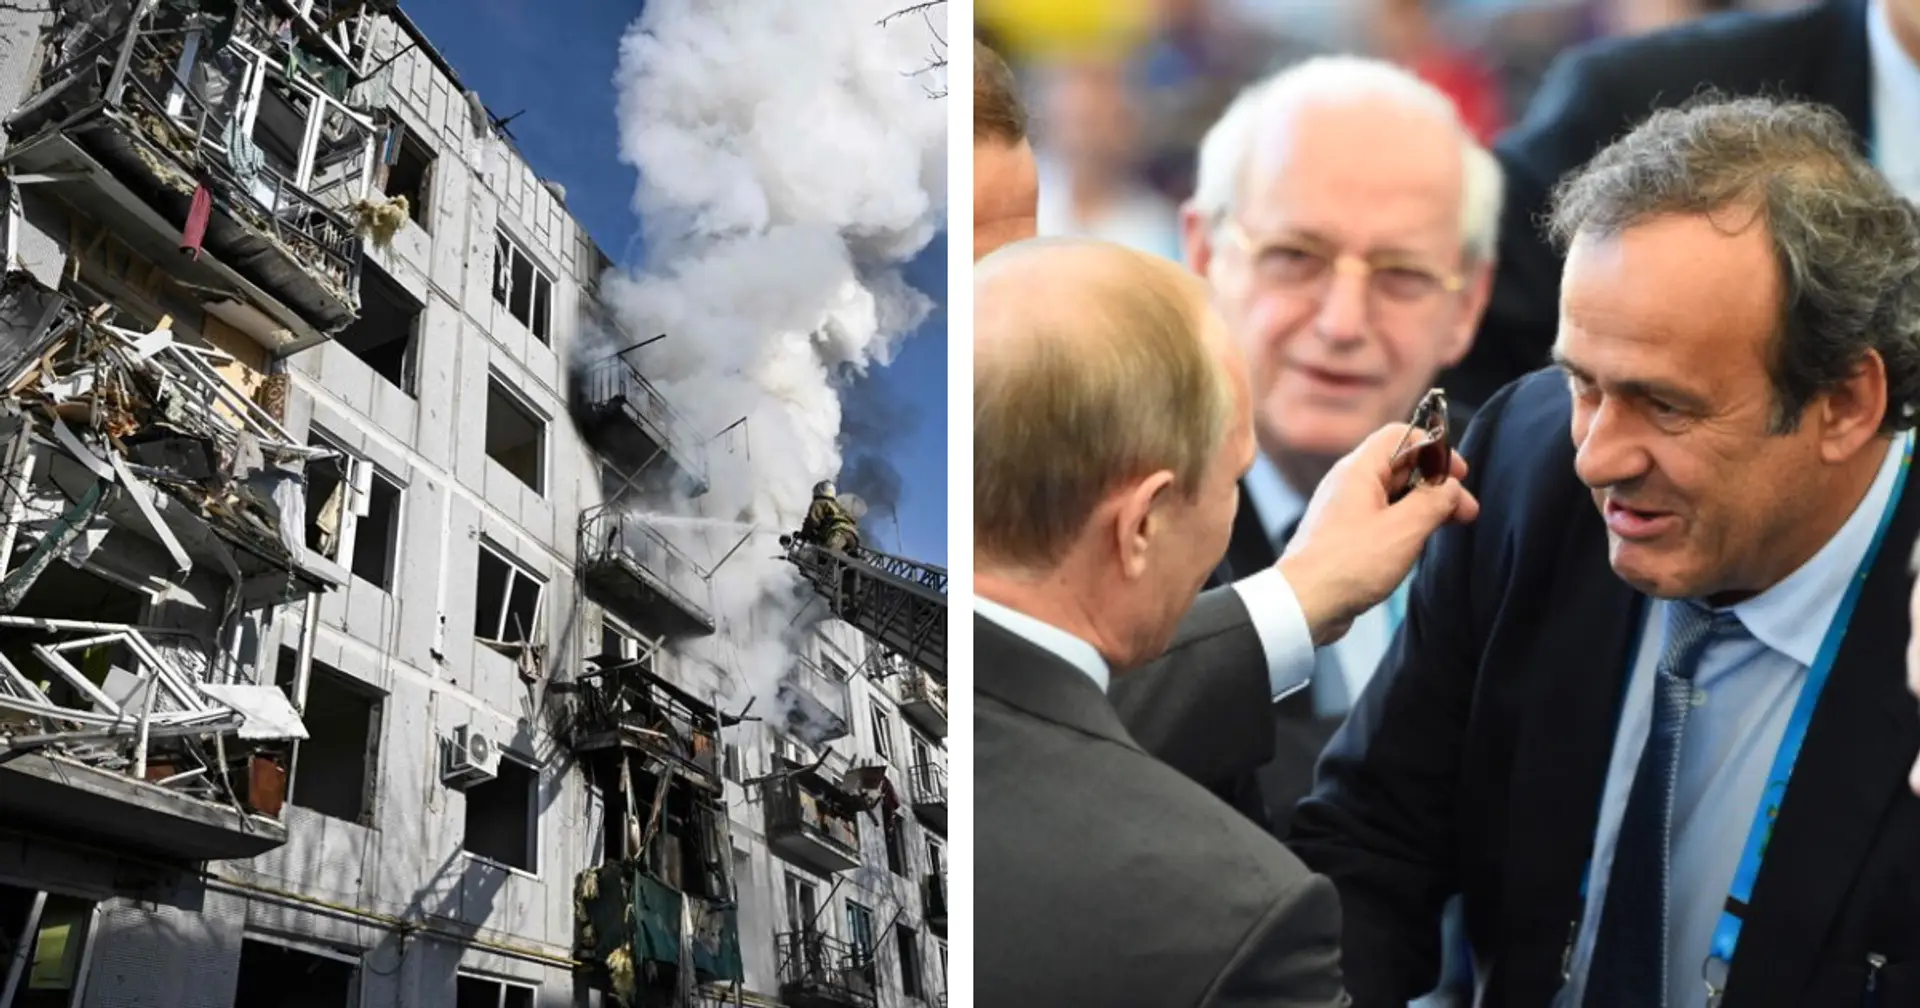 Michel Platini calls on Vladimir Putin to end 'shooting and bombing' in Ukraine